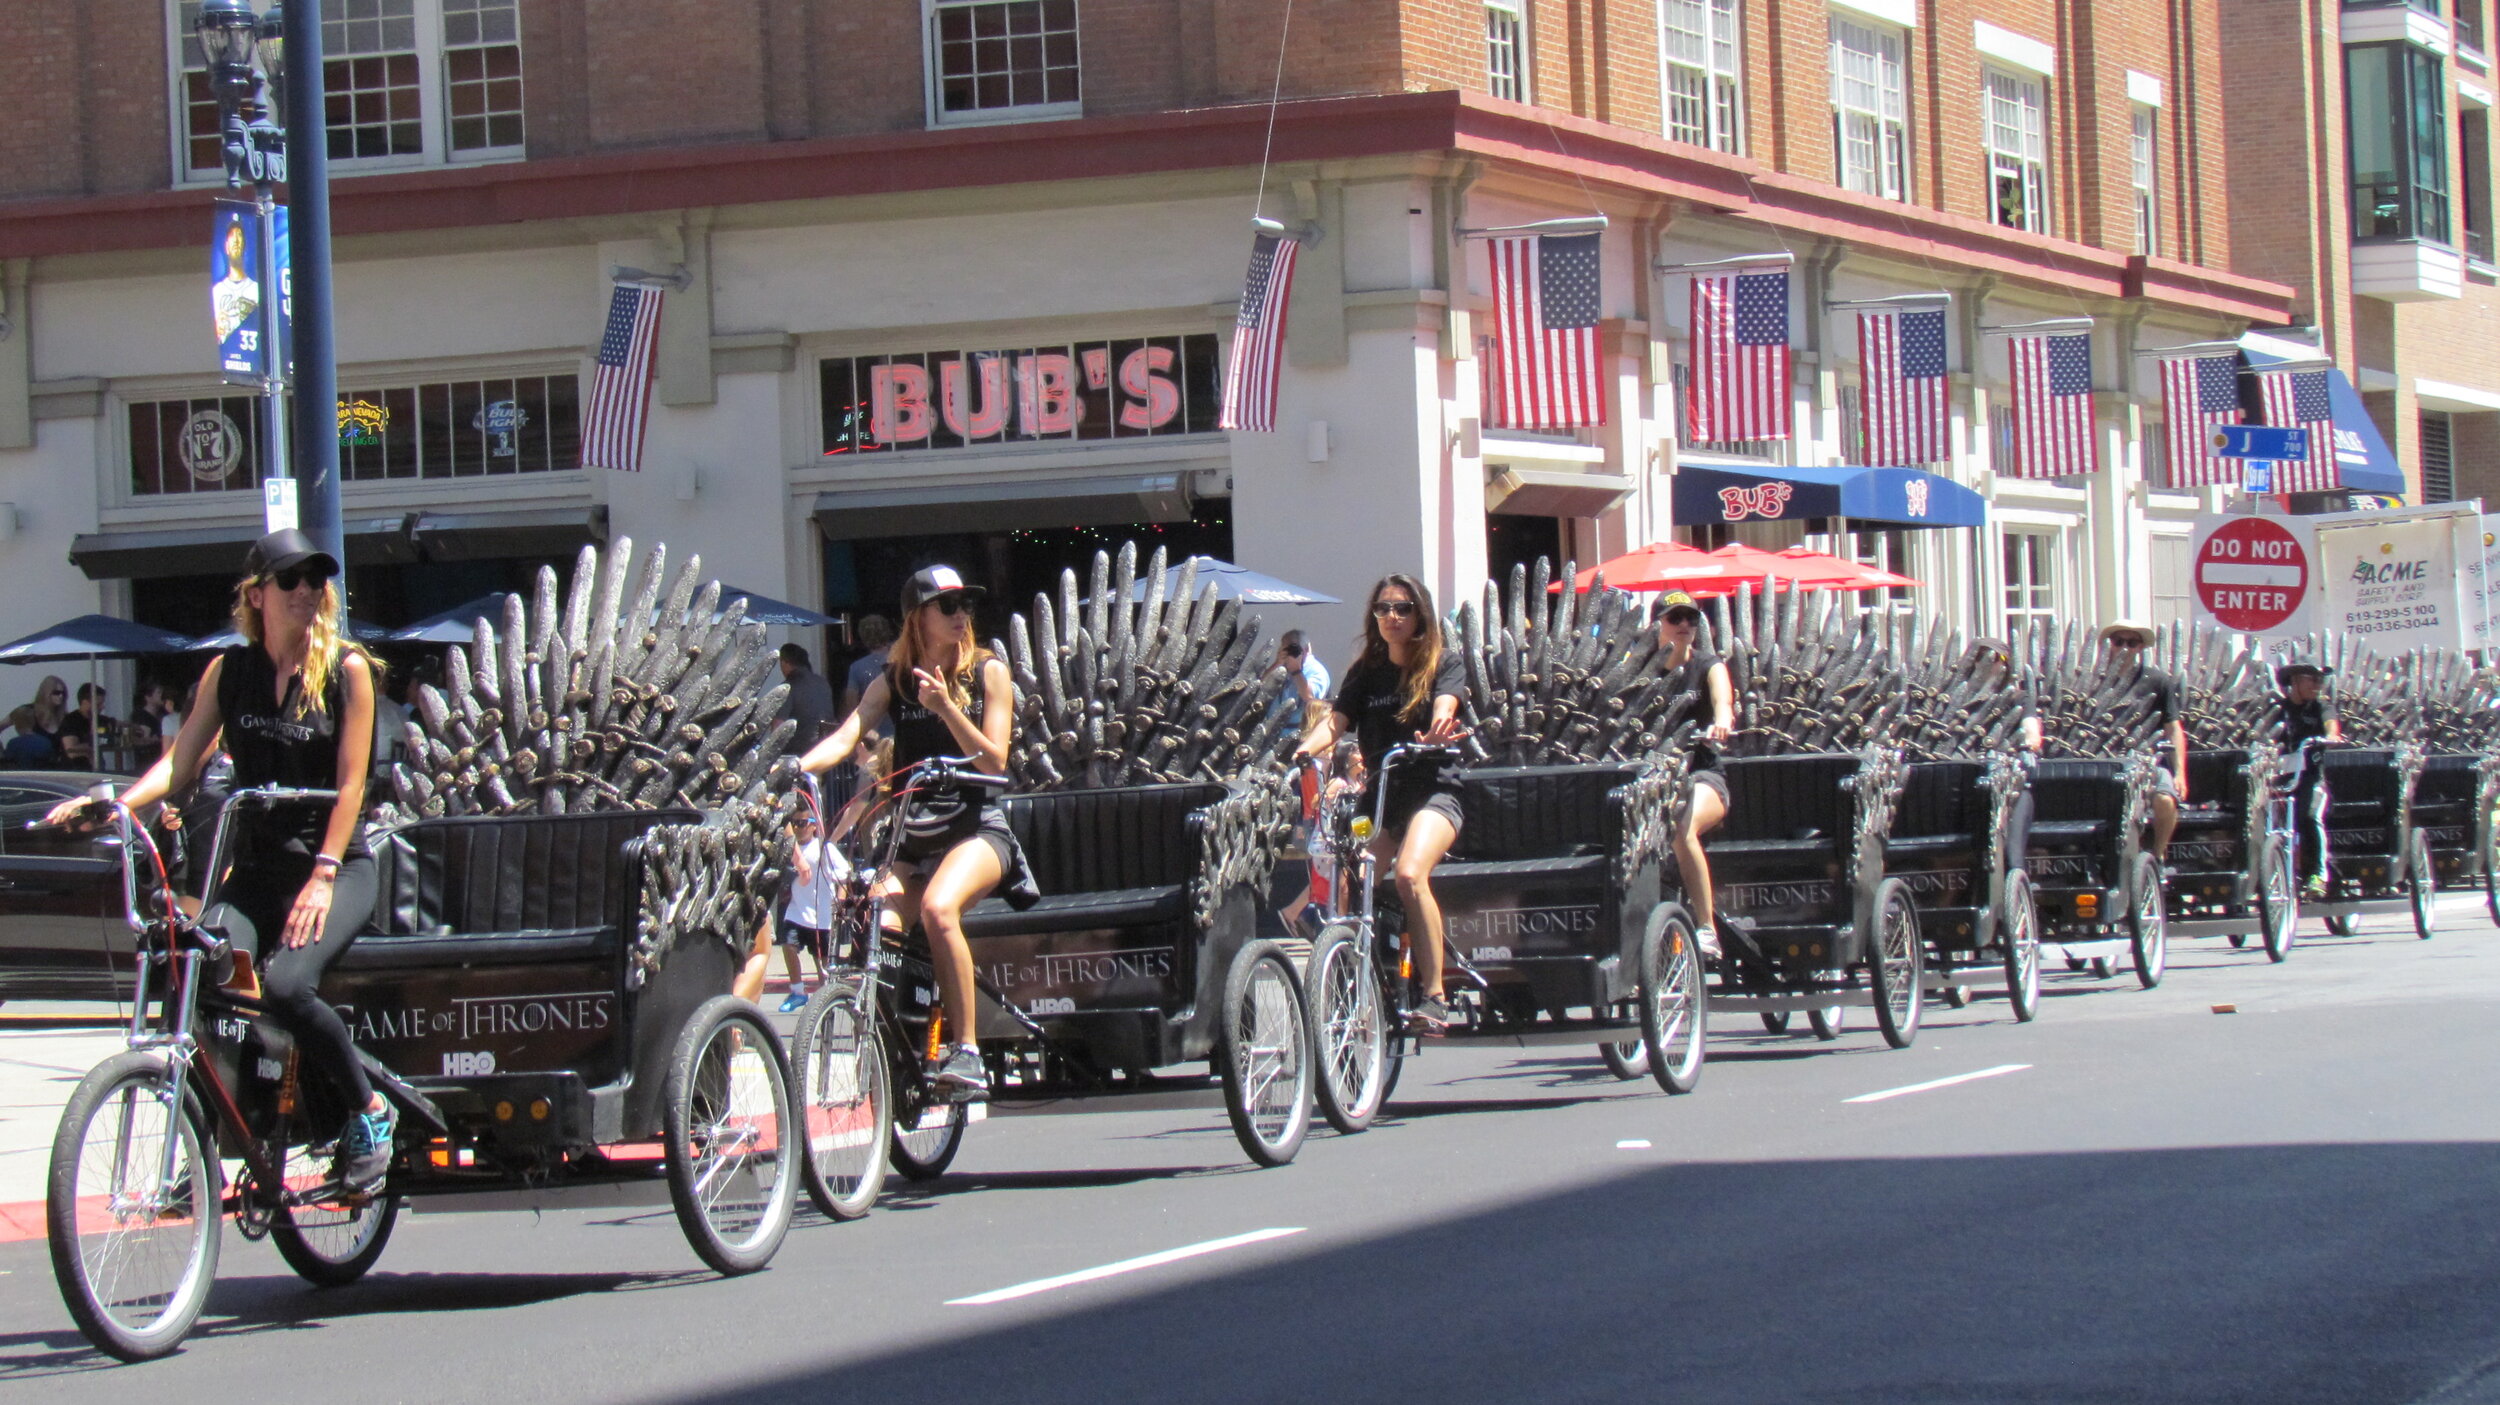 HBO Game of Thrones Comic-Con Pedicab Sponsorship